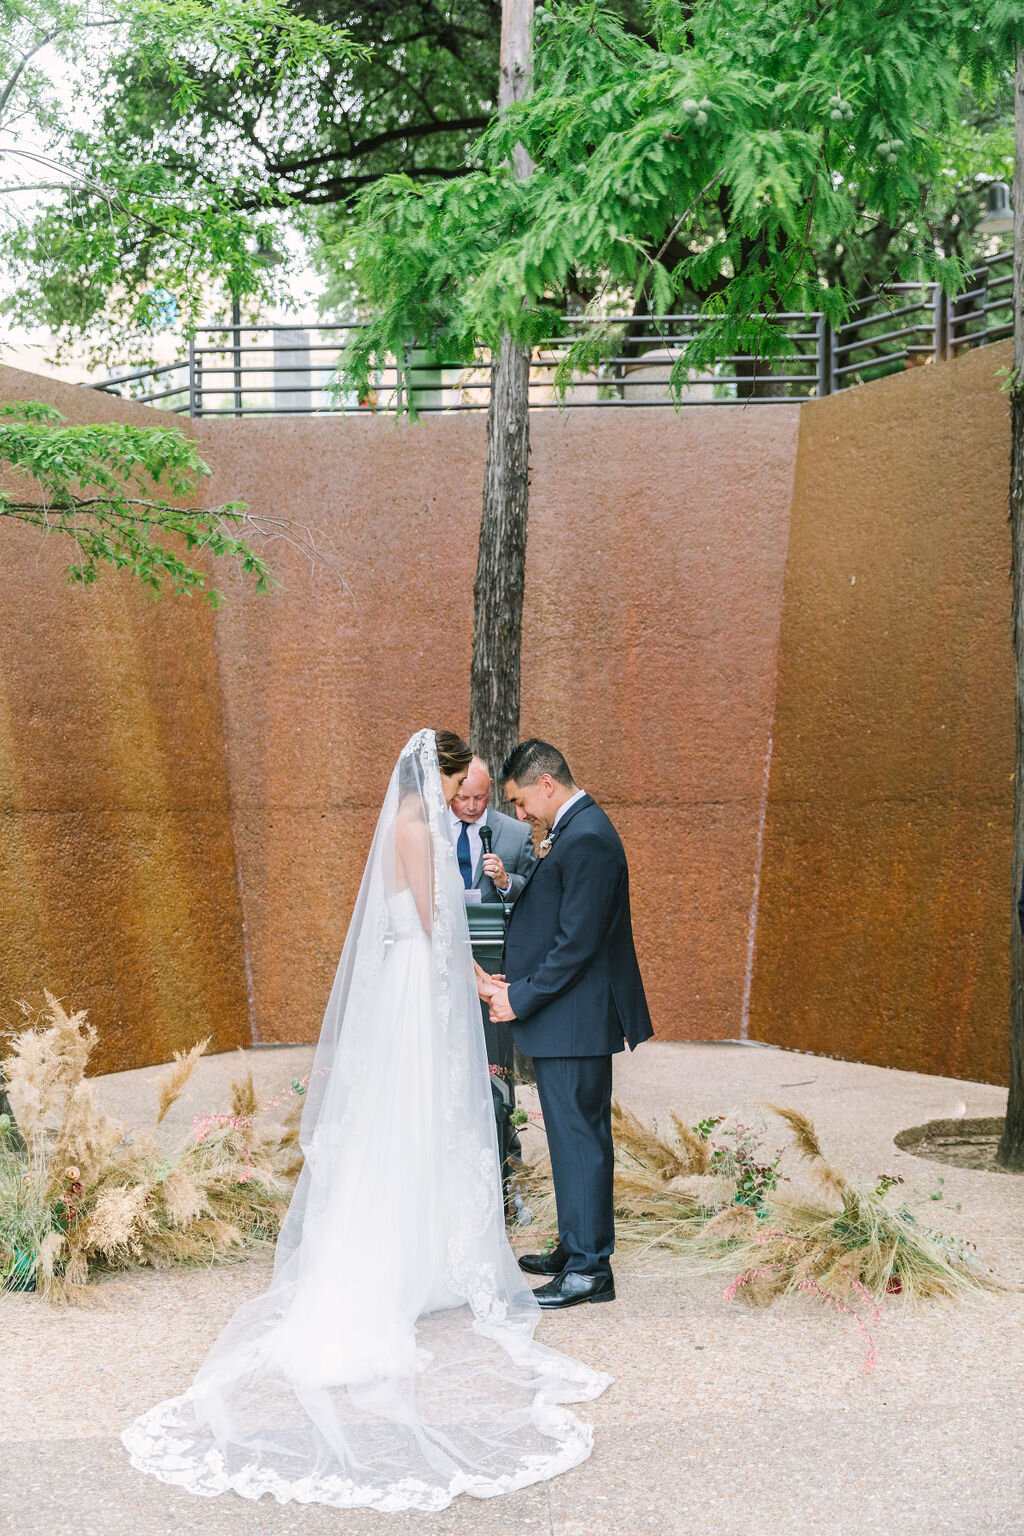 Ellen-Ashton-Photography-Dallas-Wedding-Photographers-Girt-and-gold-events-weddings80.jpg